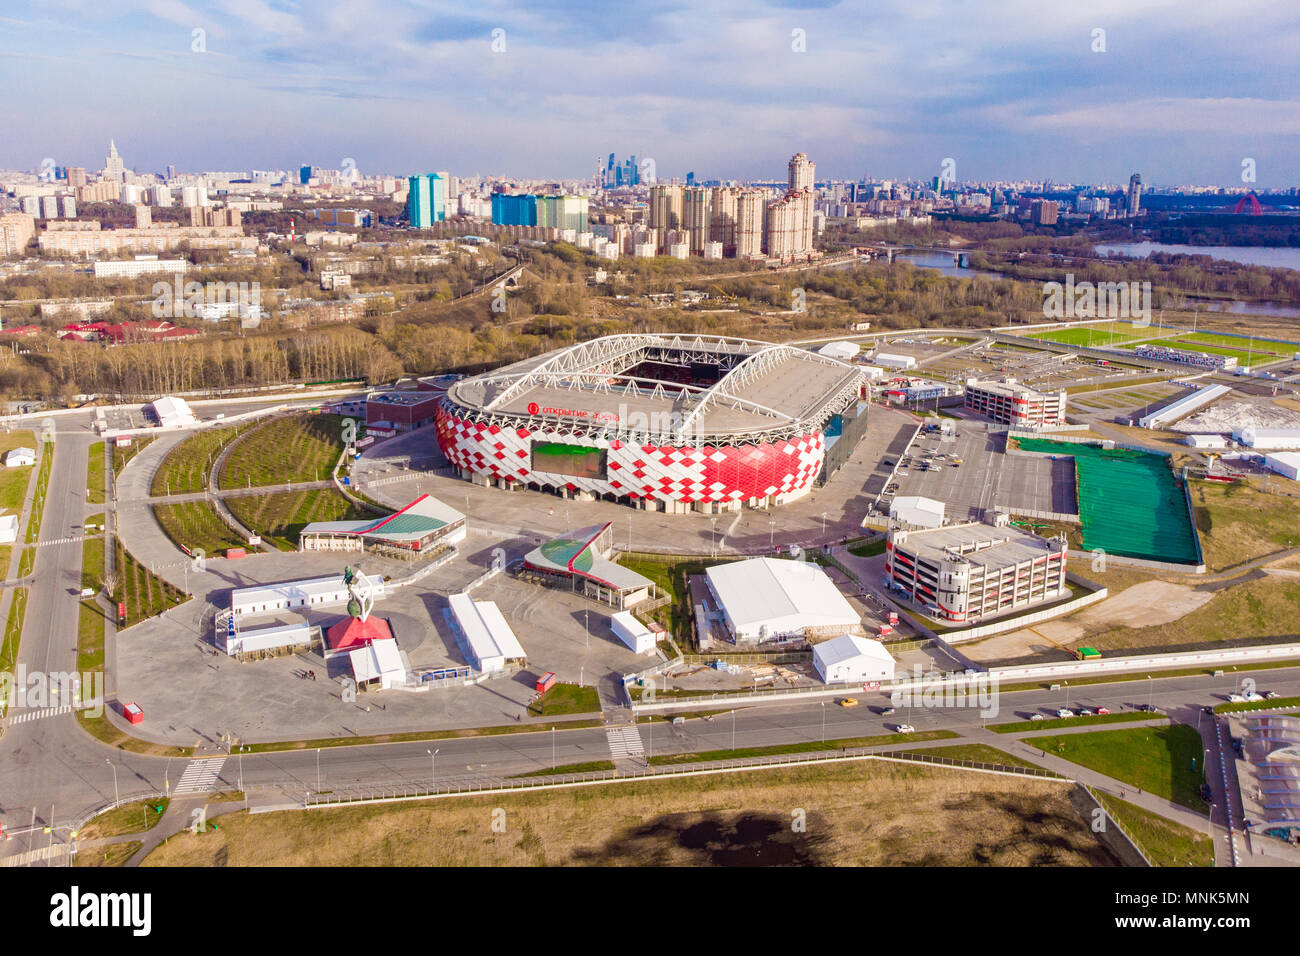 Otkrytiye Arena - Spartak Moscow 3D model – Genius&Gerry